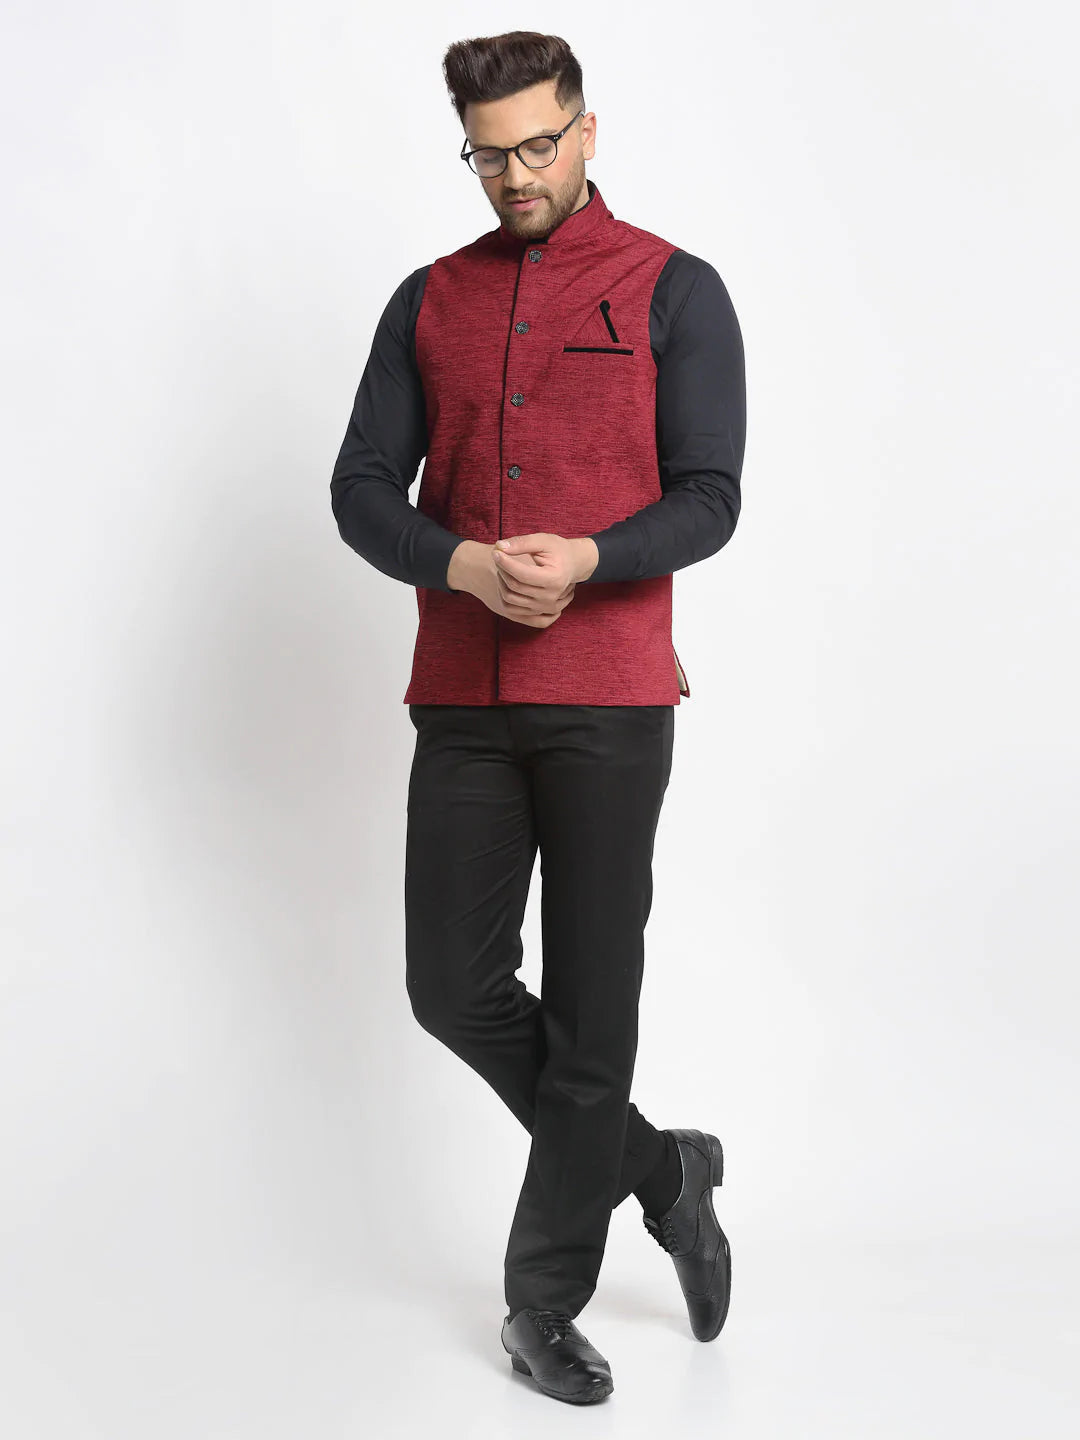 Jompers Men's Maroon Solid Nehru Jacket with Square Pocket ( JOWC 4024Maroon )